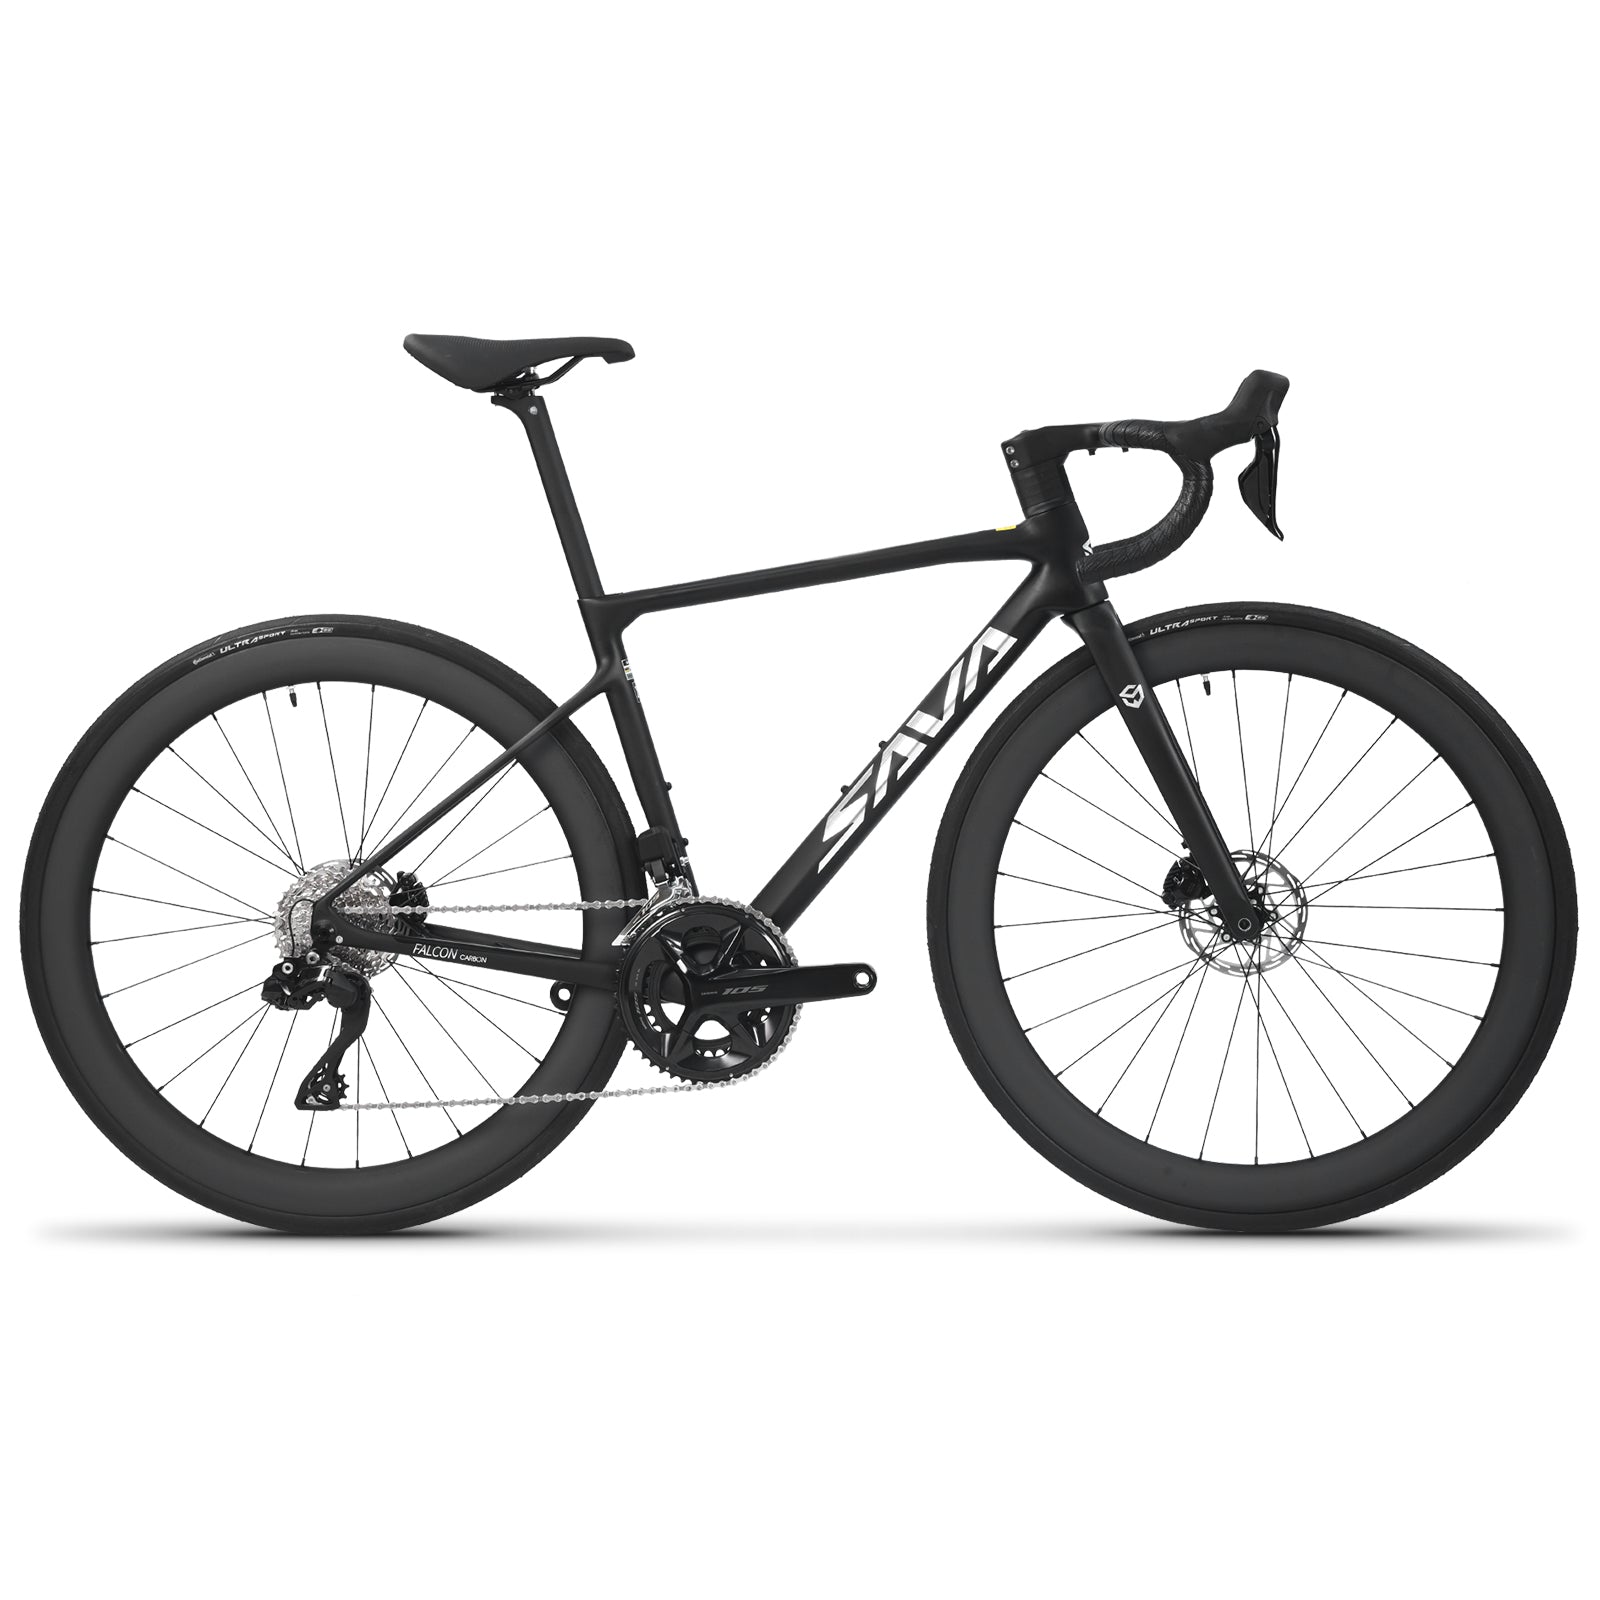 Full Carbon Road Bike|Shimano 105 Di2 Groupset|SAVA Falcon 7.0 Black